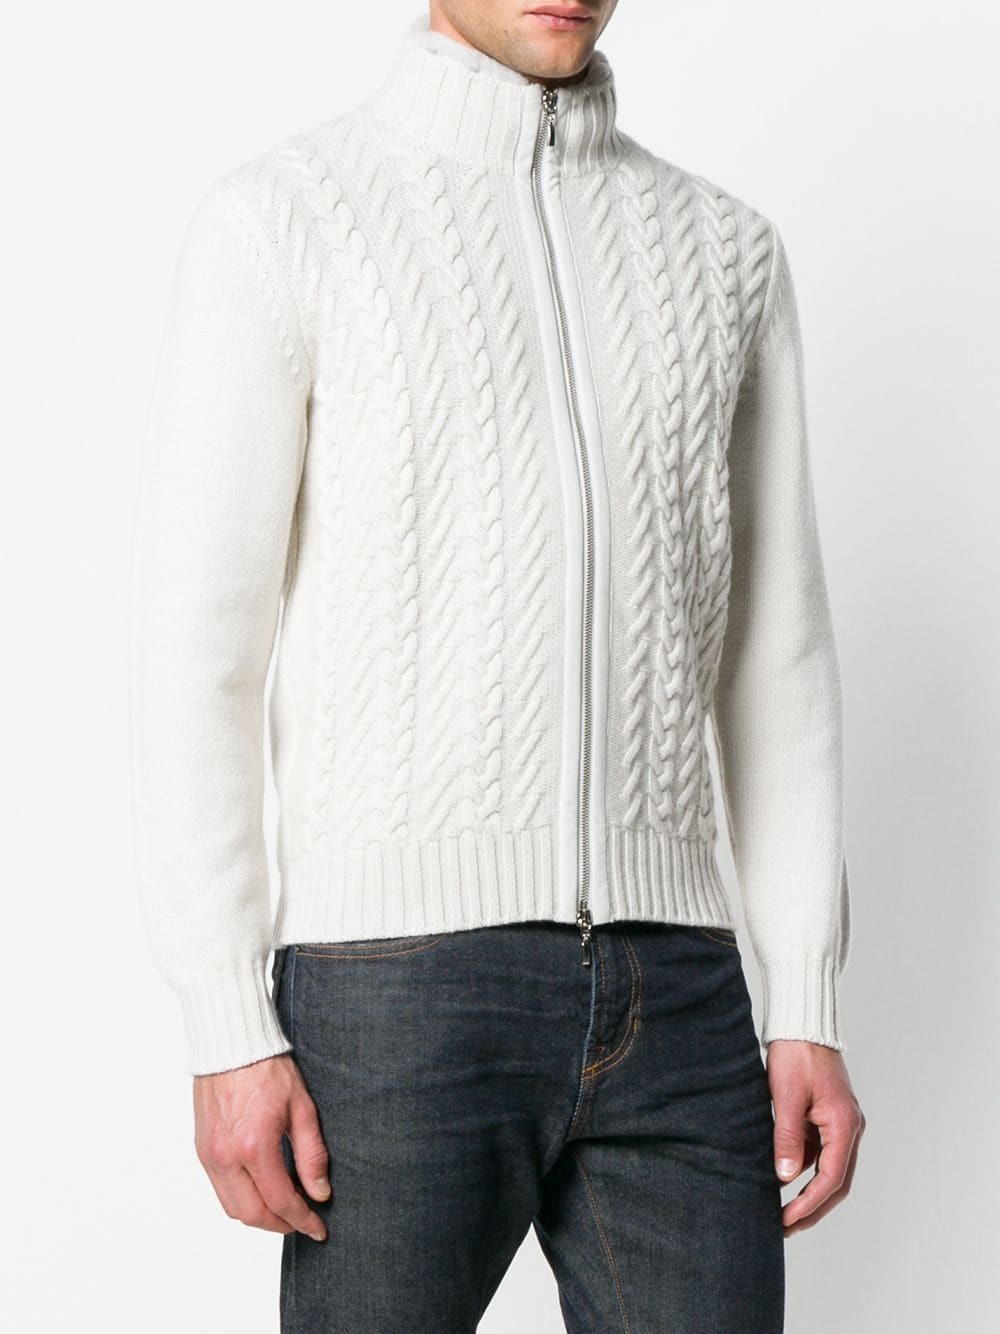 Doriani Mens 100% Cashmere Suede Trimmed Full Zip Sweater US M IT 50